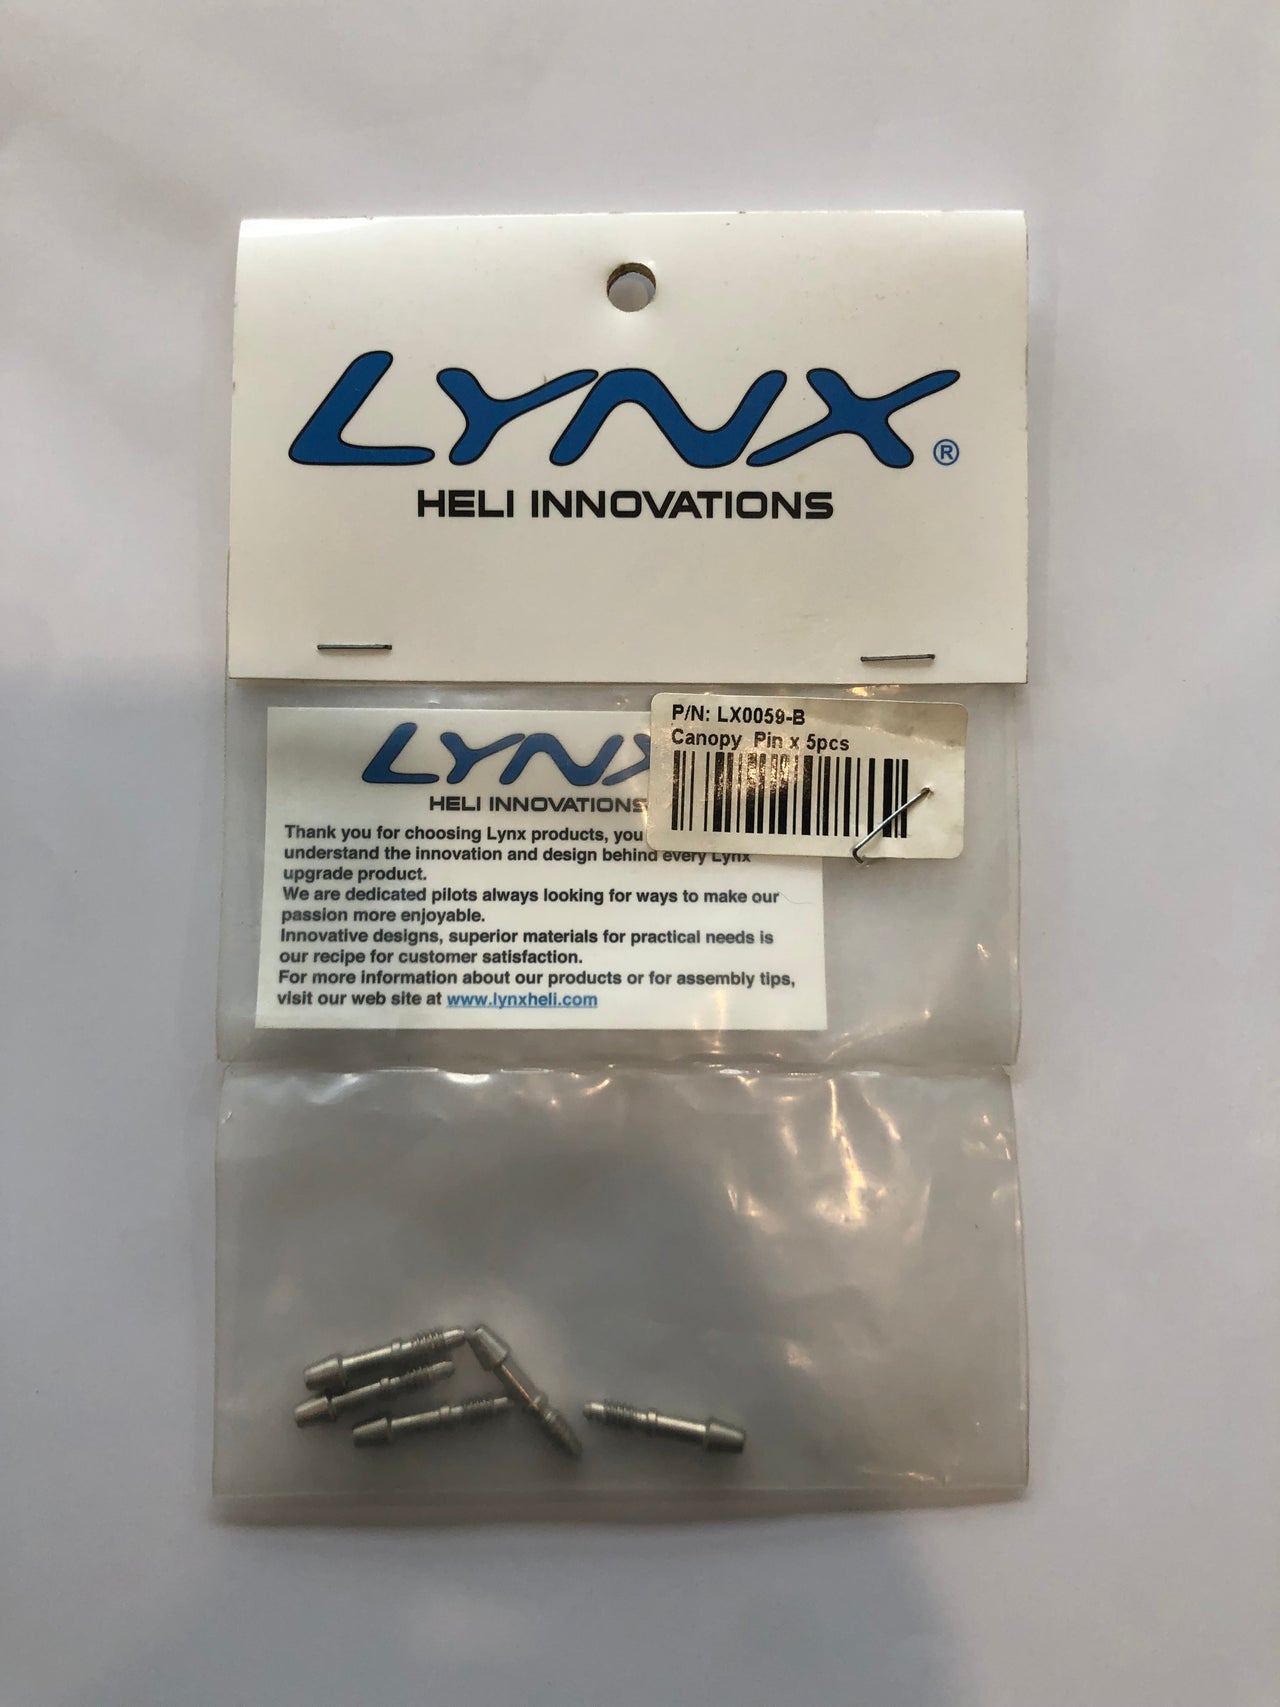 LYNX LX0059-B Canopy pin x5pcs